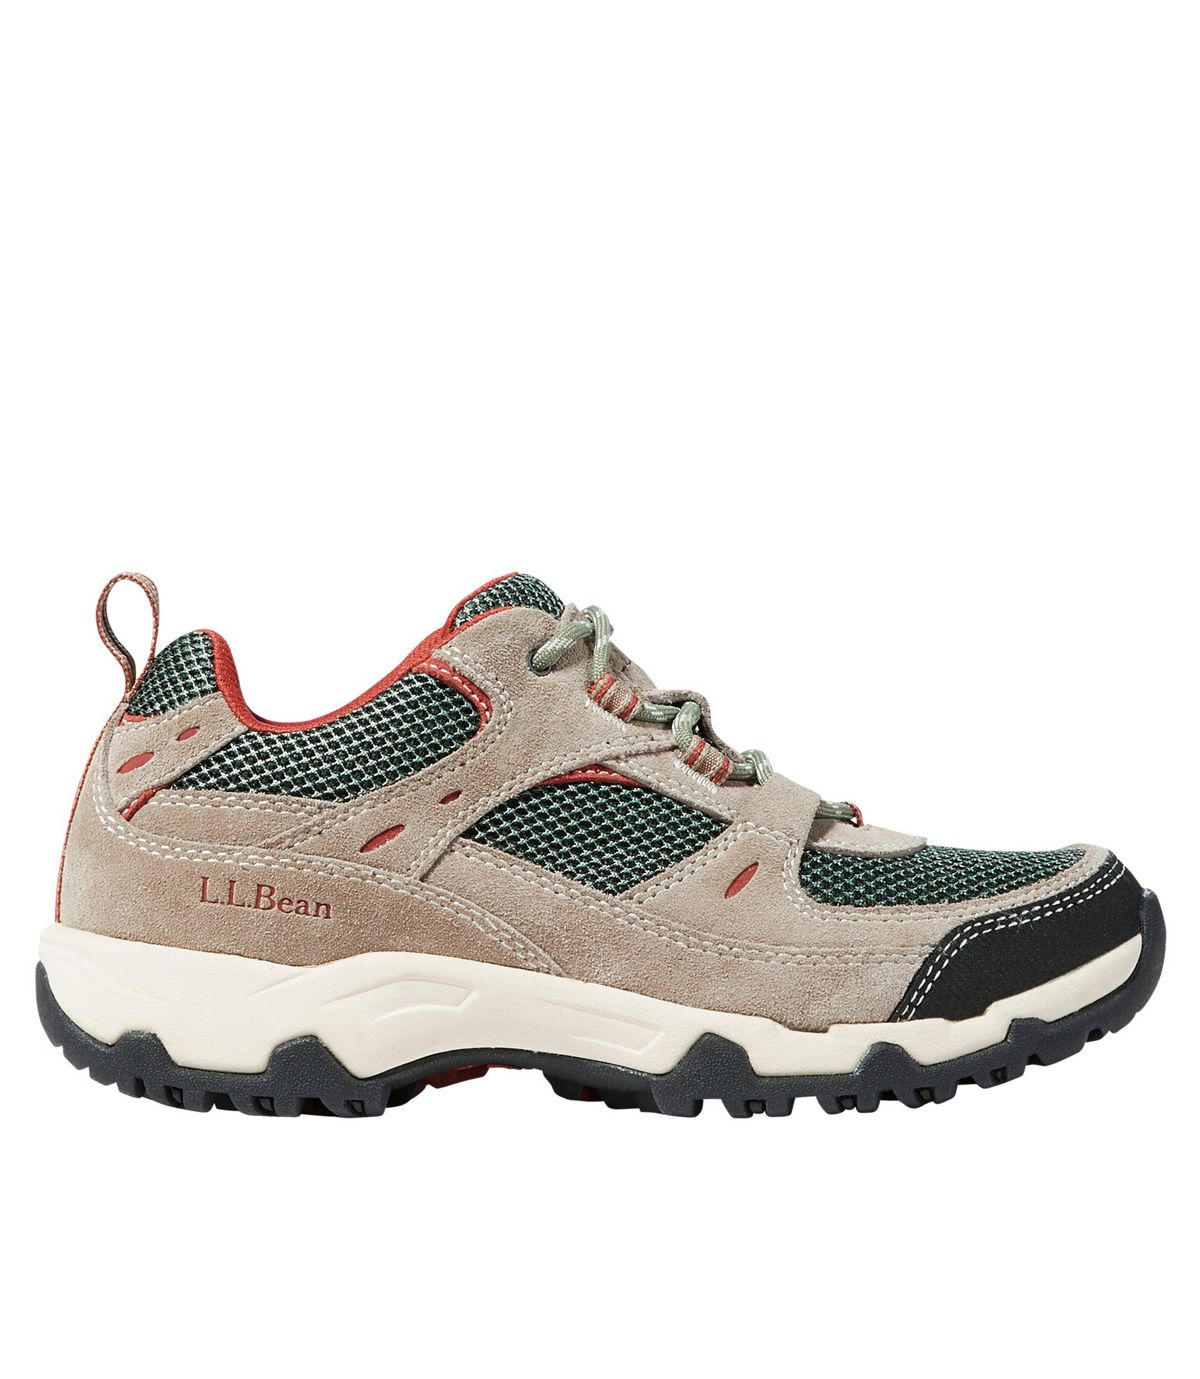 L.L. Bean + Trail Model 4 Ventilated Hiking Shoes